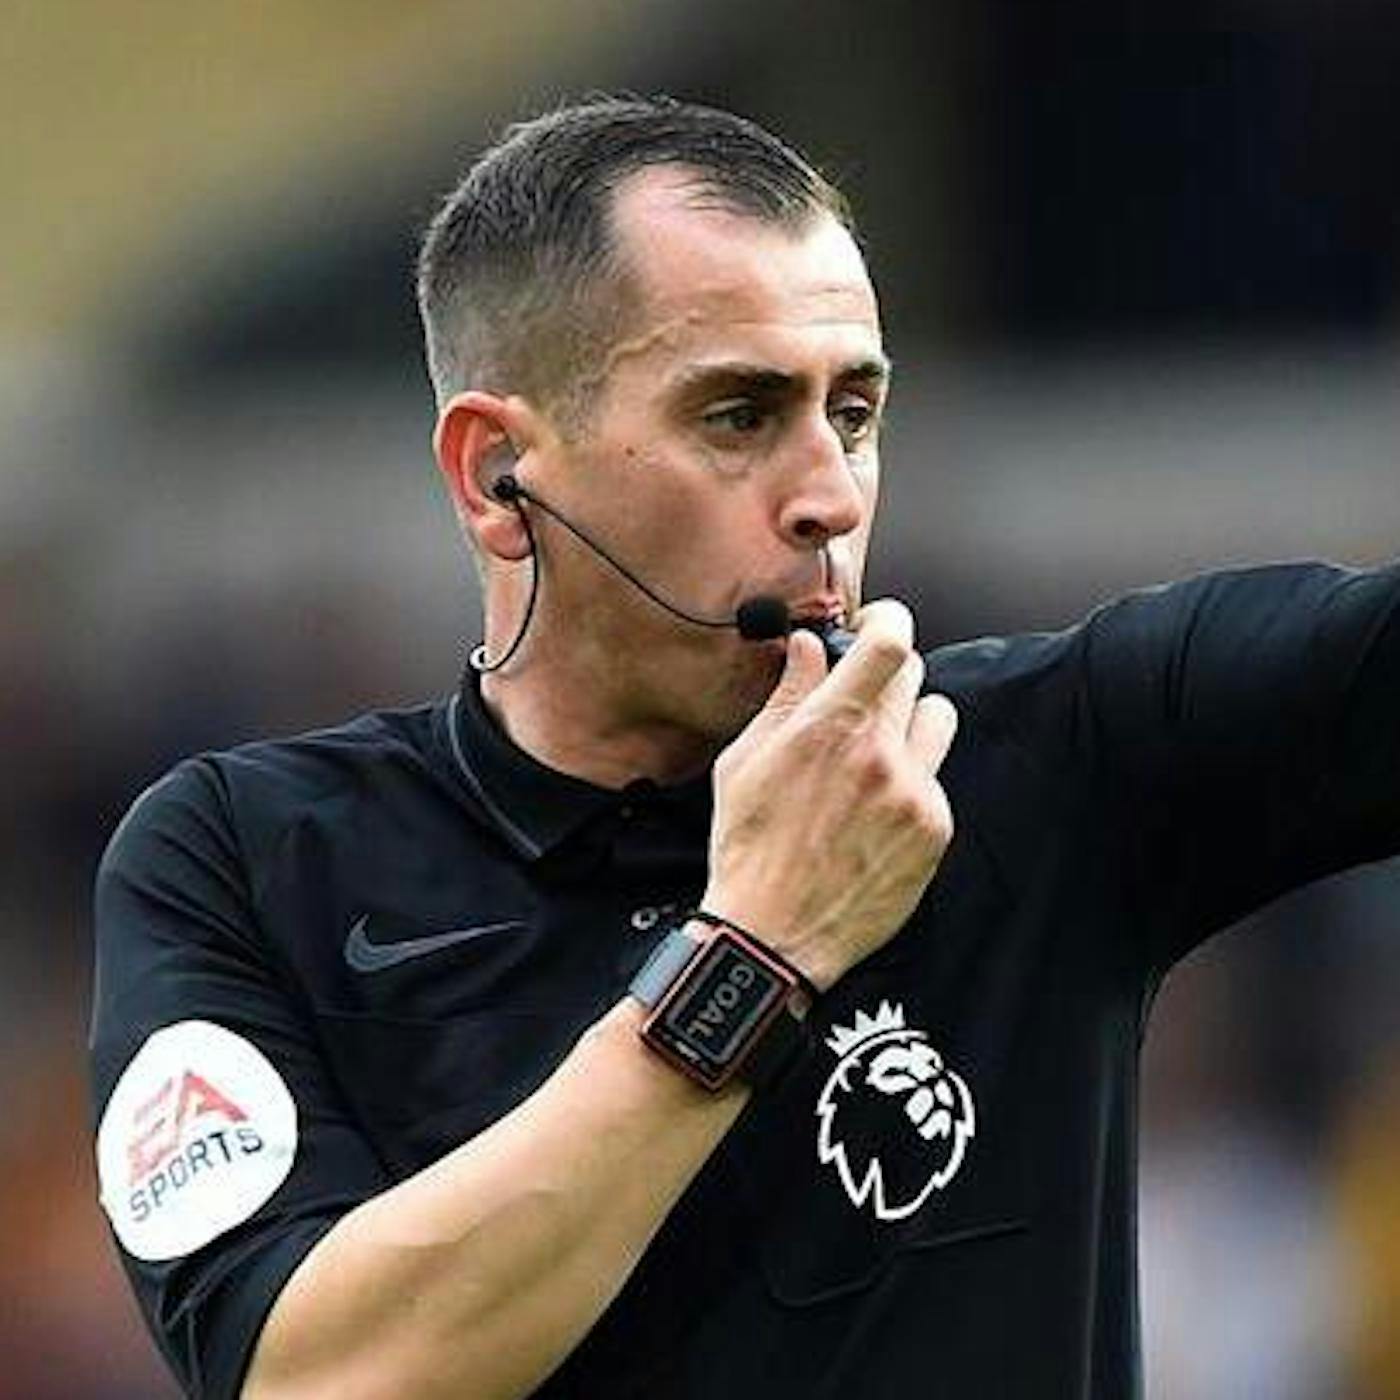 West Ham late equaliser “Gutting” says referee